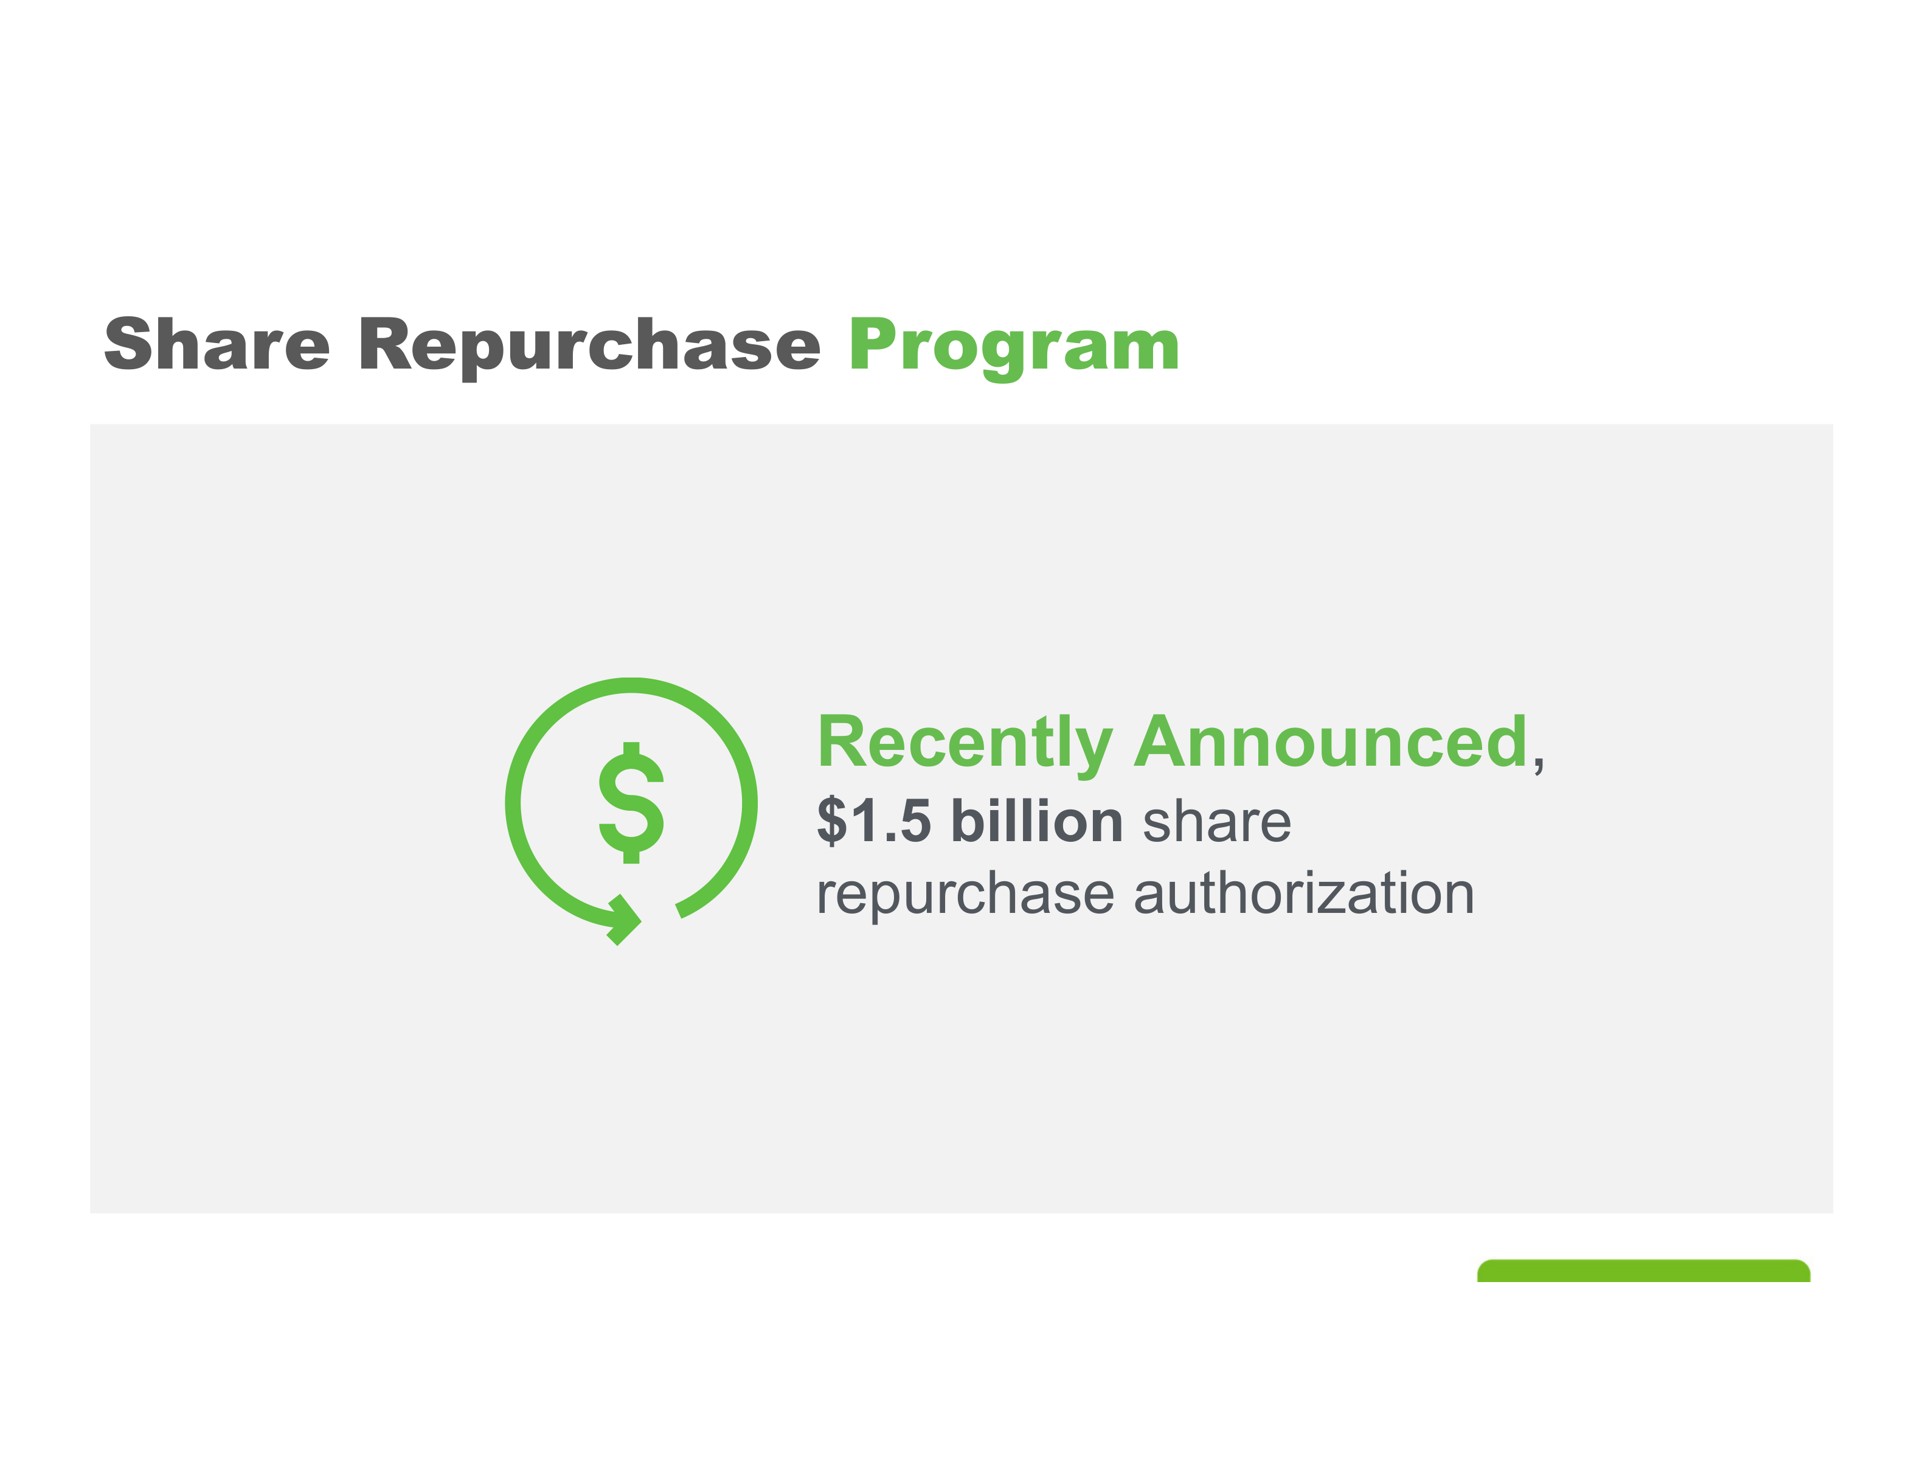 share repurchase program recently announced billion authorization | Herbalife